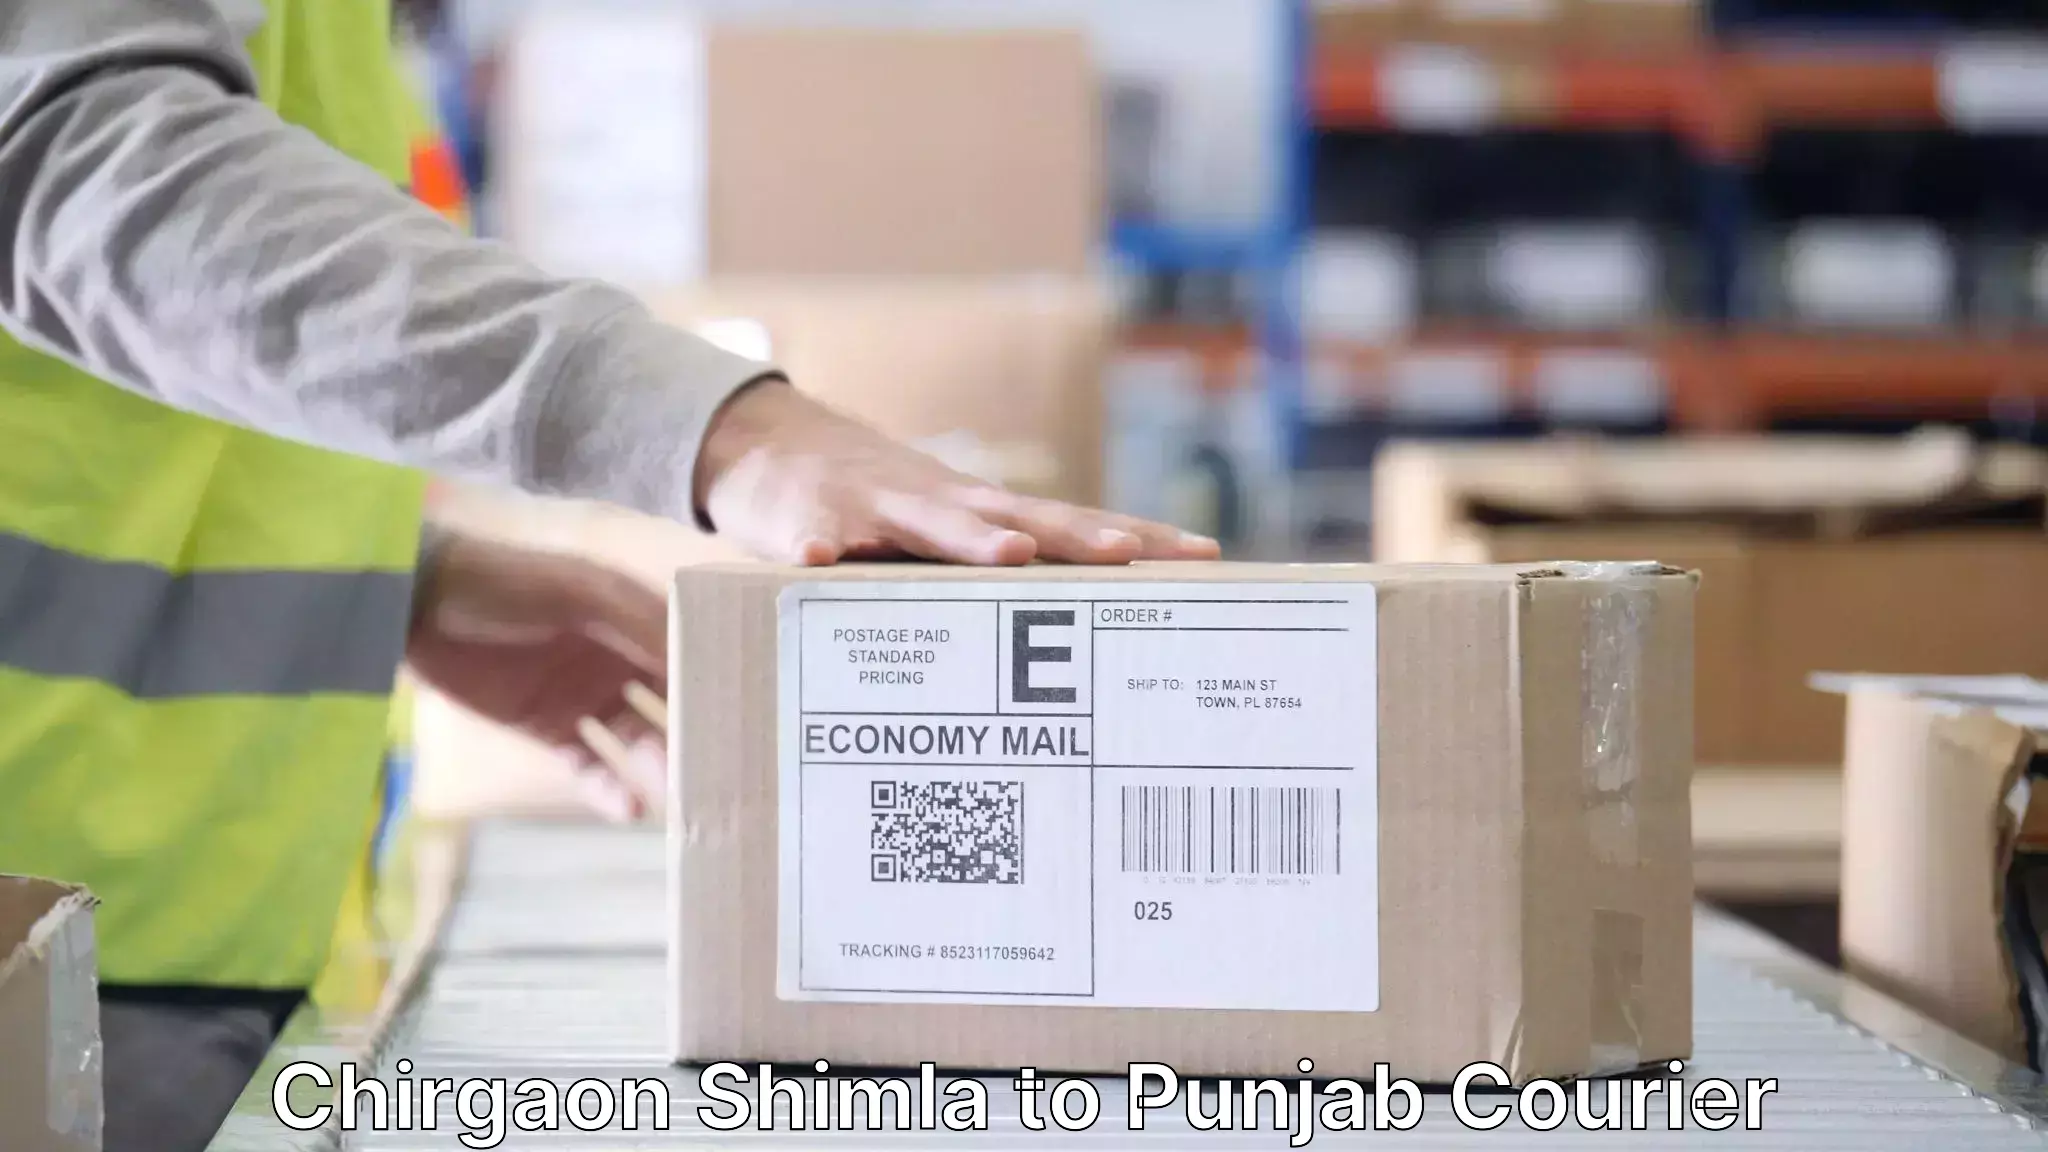 Cost-effective moving options Chirgaon Shimla to Punjab